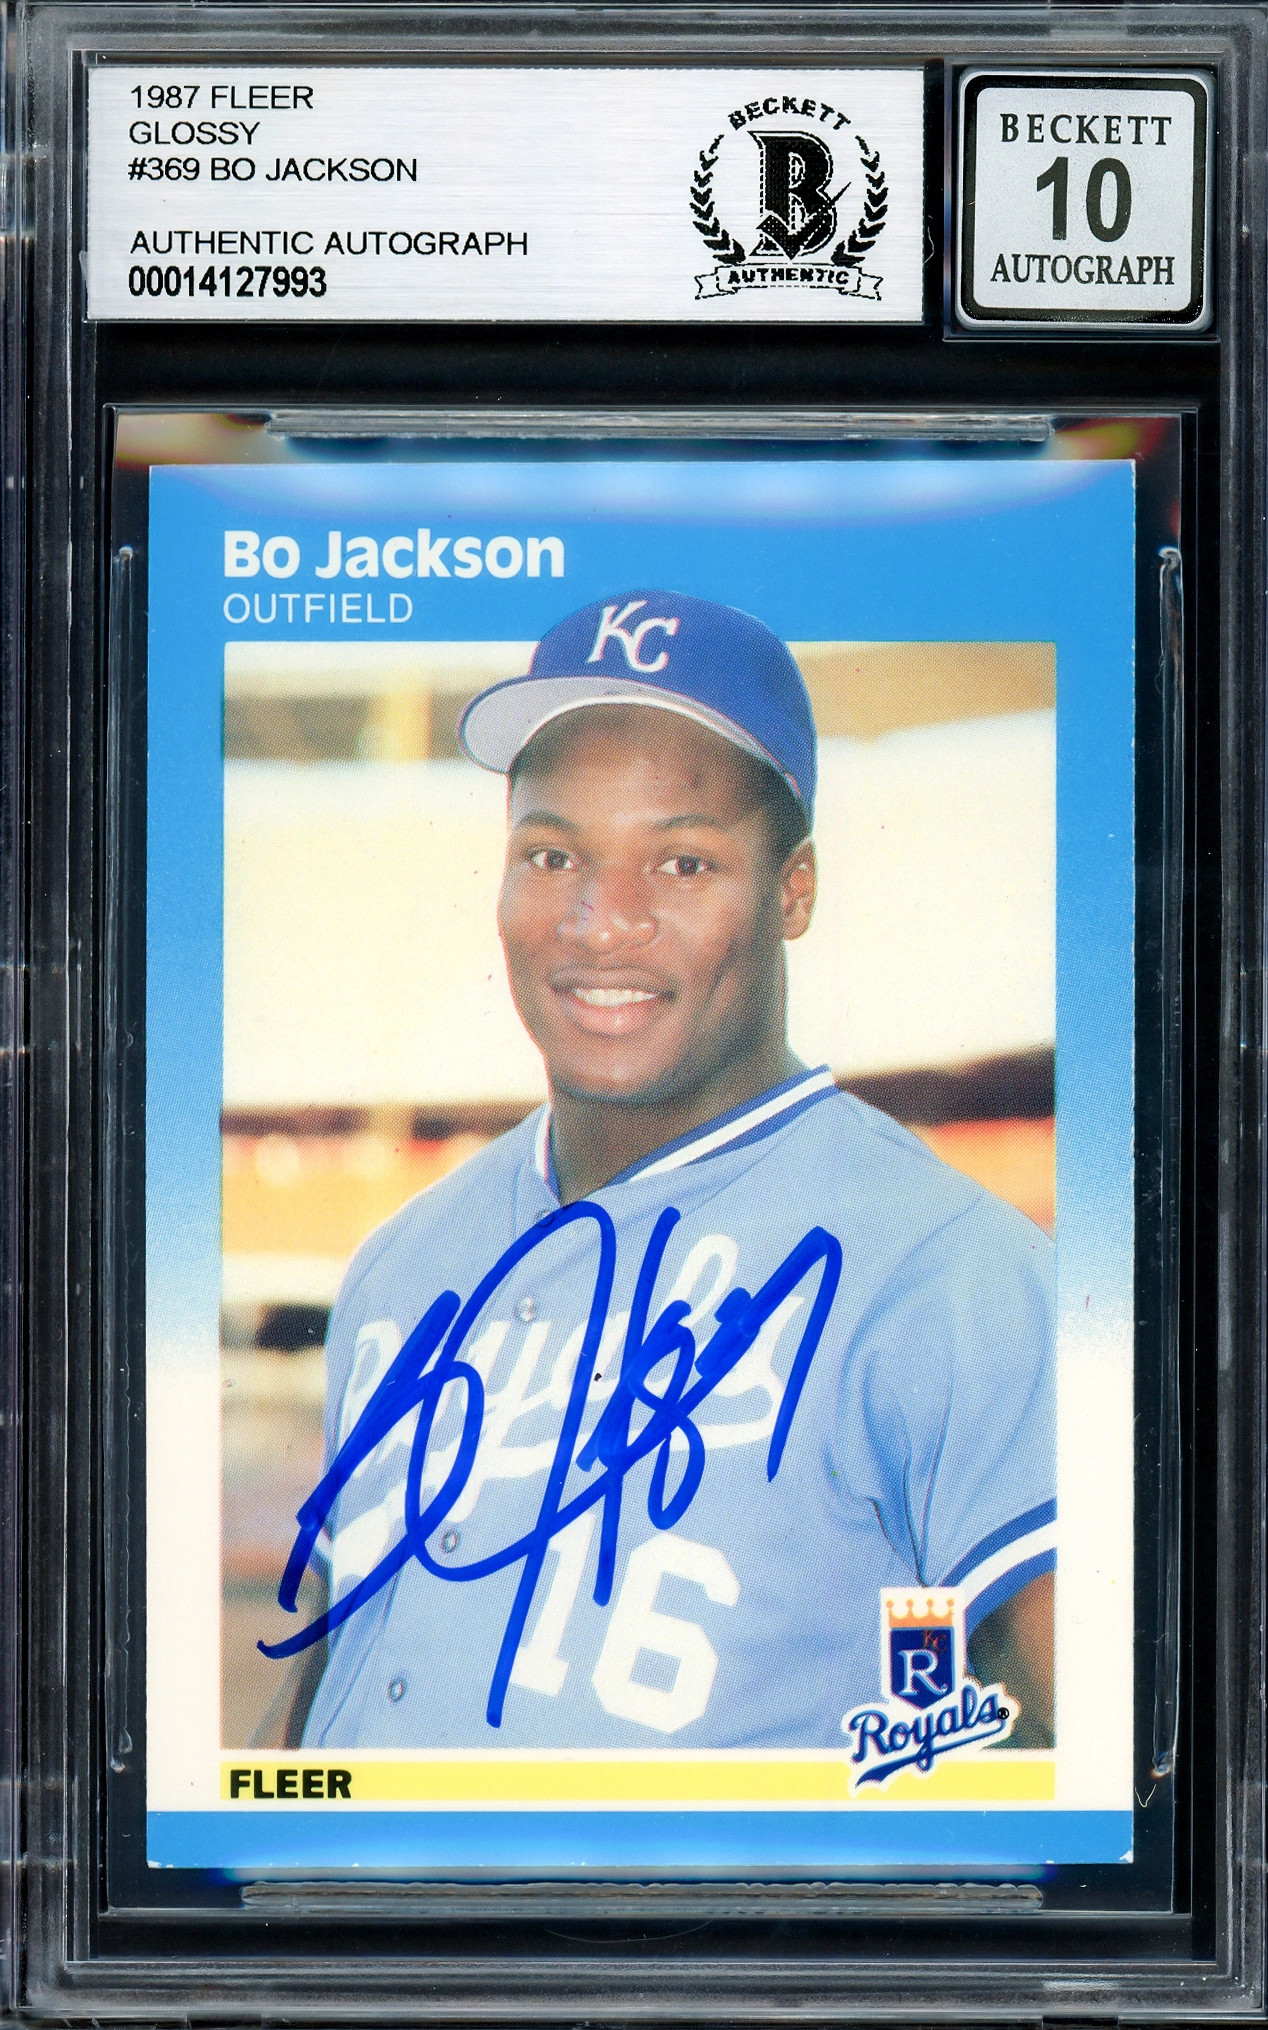 Bo Jackson Autographed 1987 Donruss The Rookies Rookie Card #14